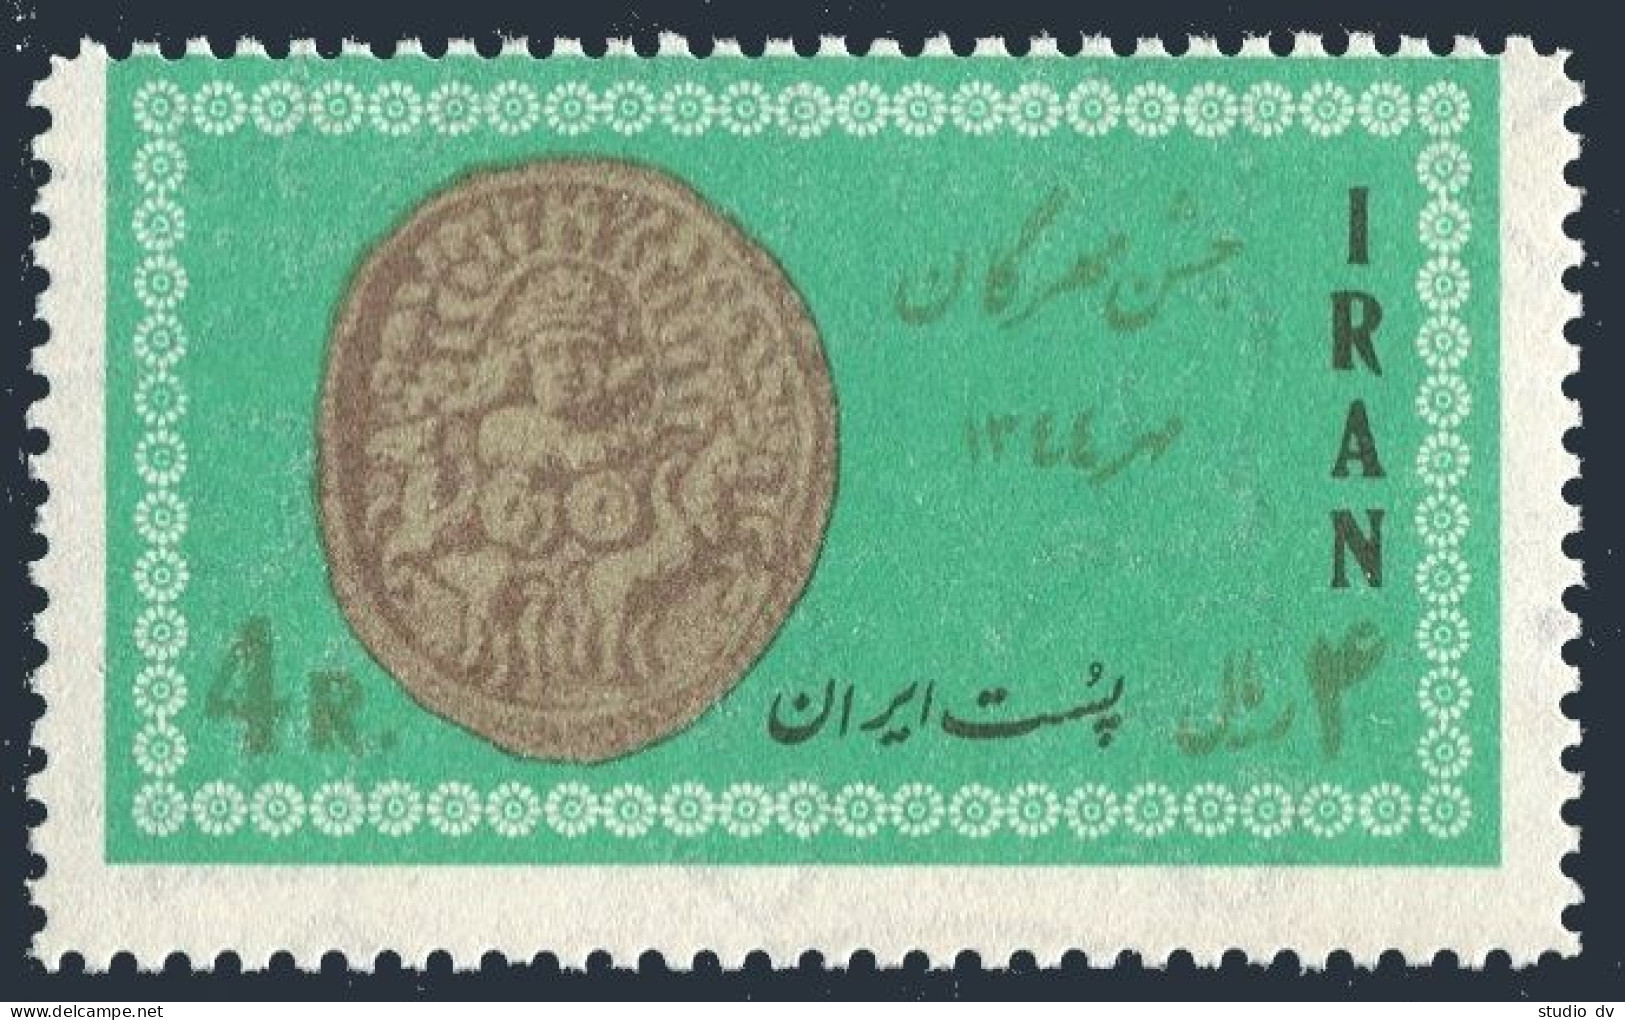 Iran 1355,MNH. Mithras On Ancient Seal.Mehragan-1965. - Iran